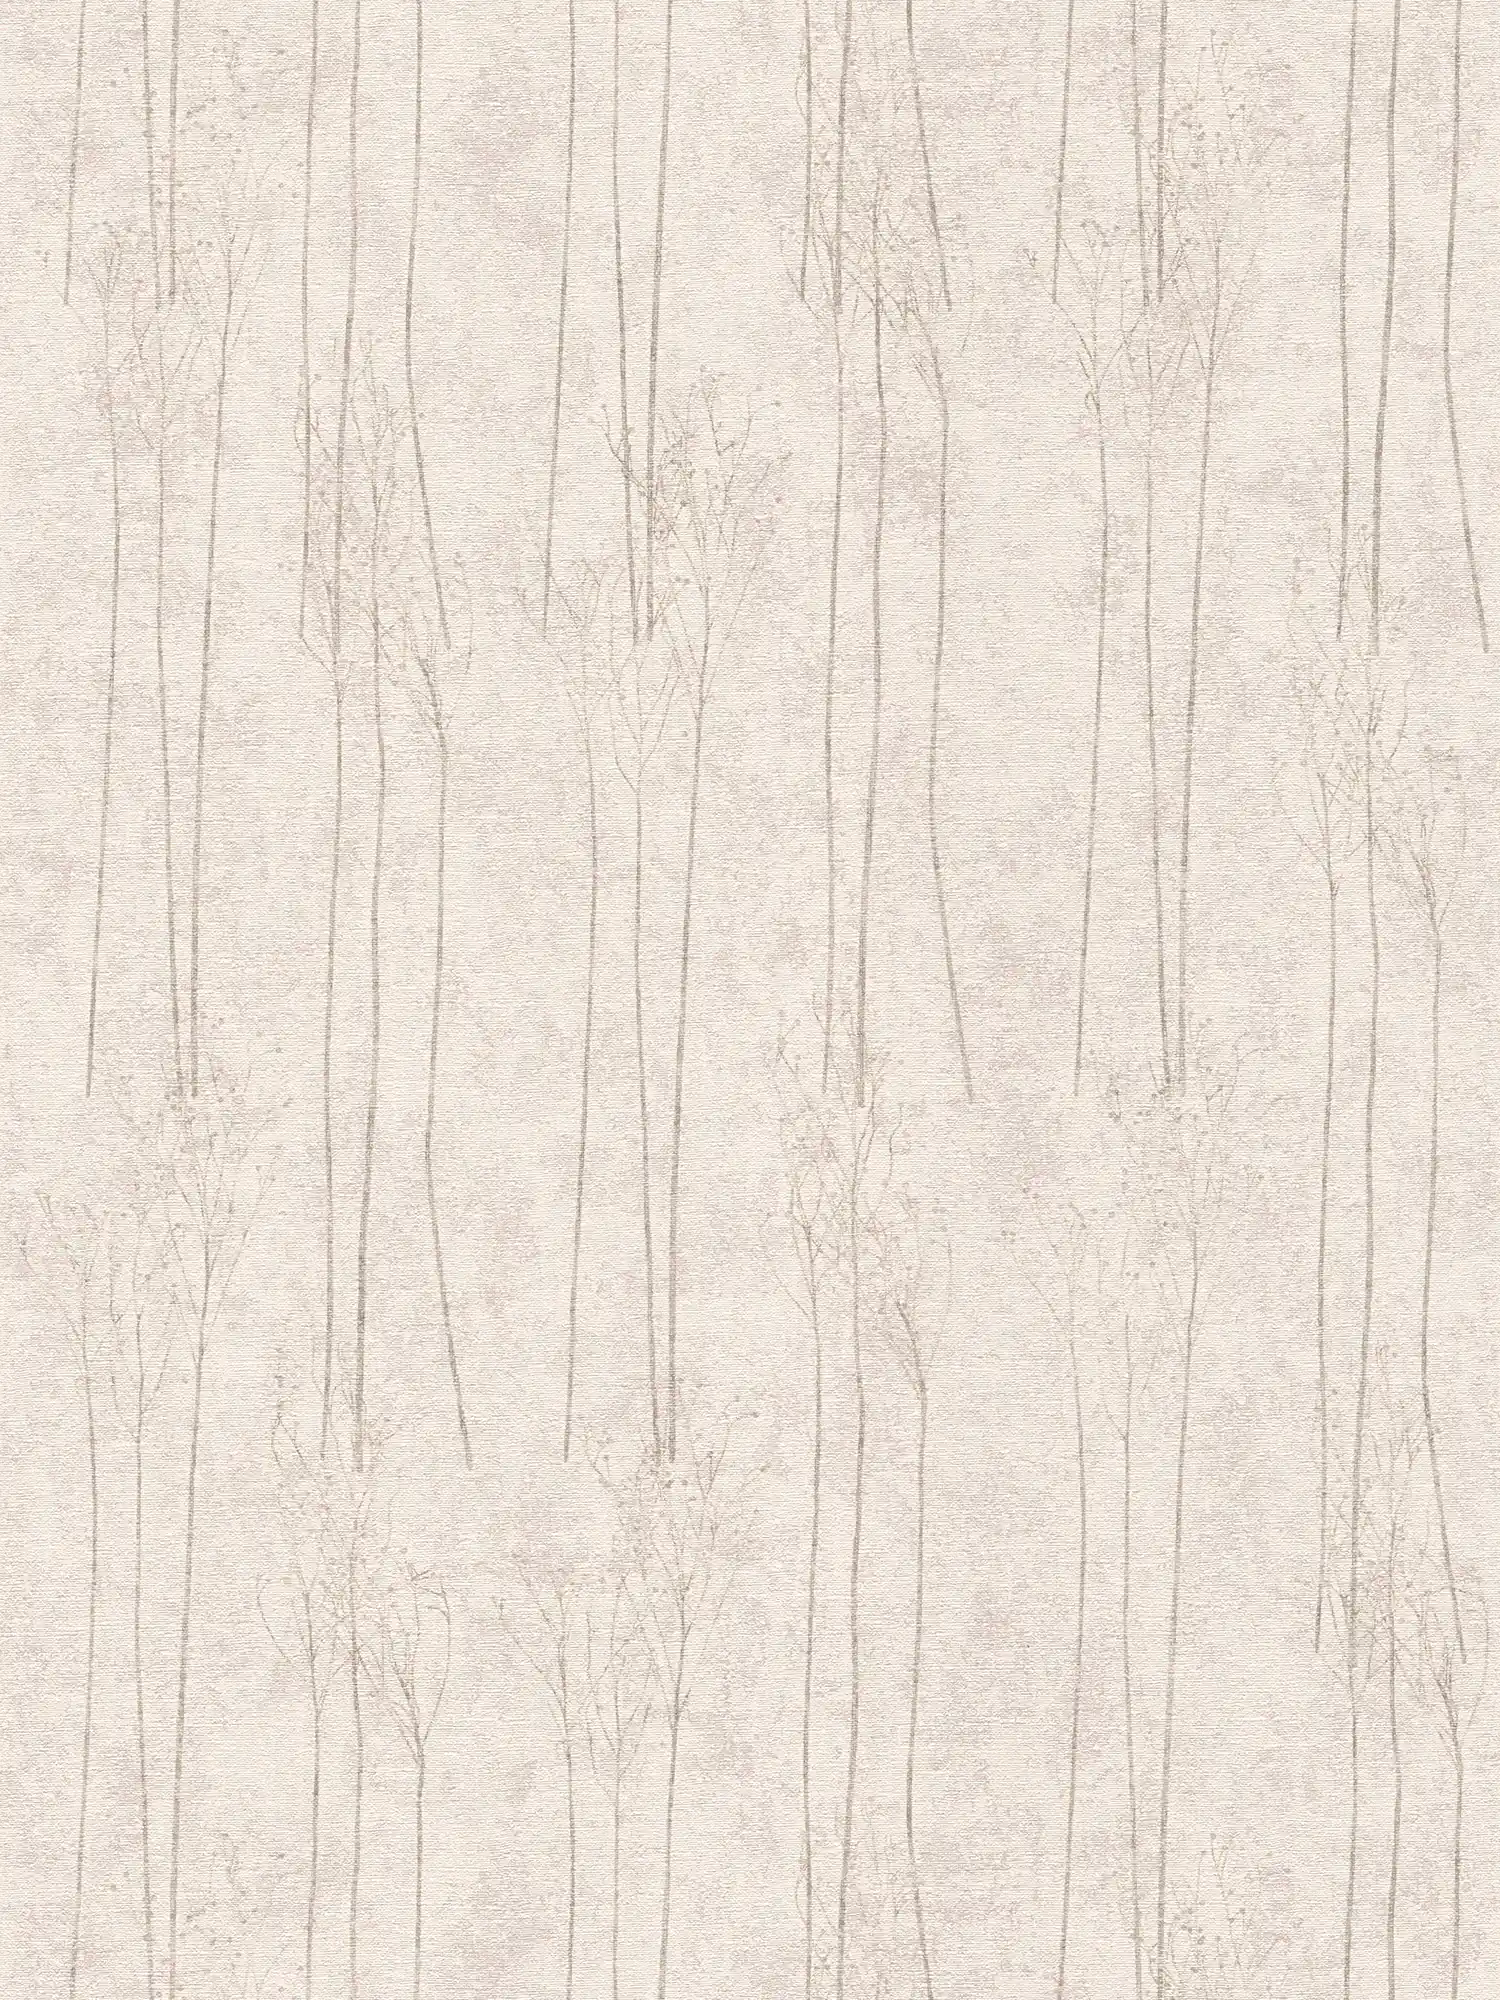 Wallpaper Scandi style with texture details - beige, grey
